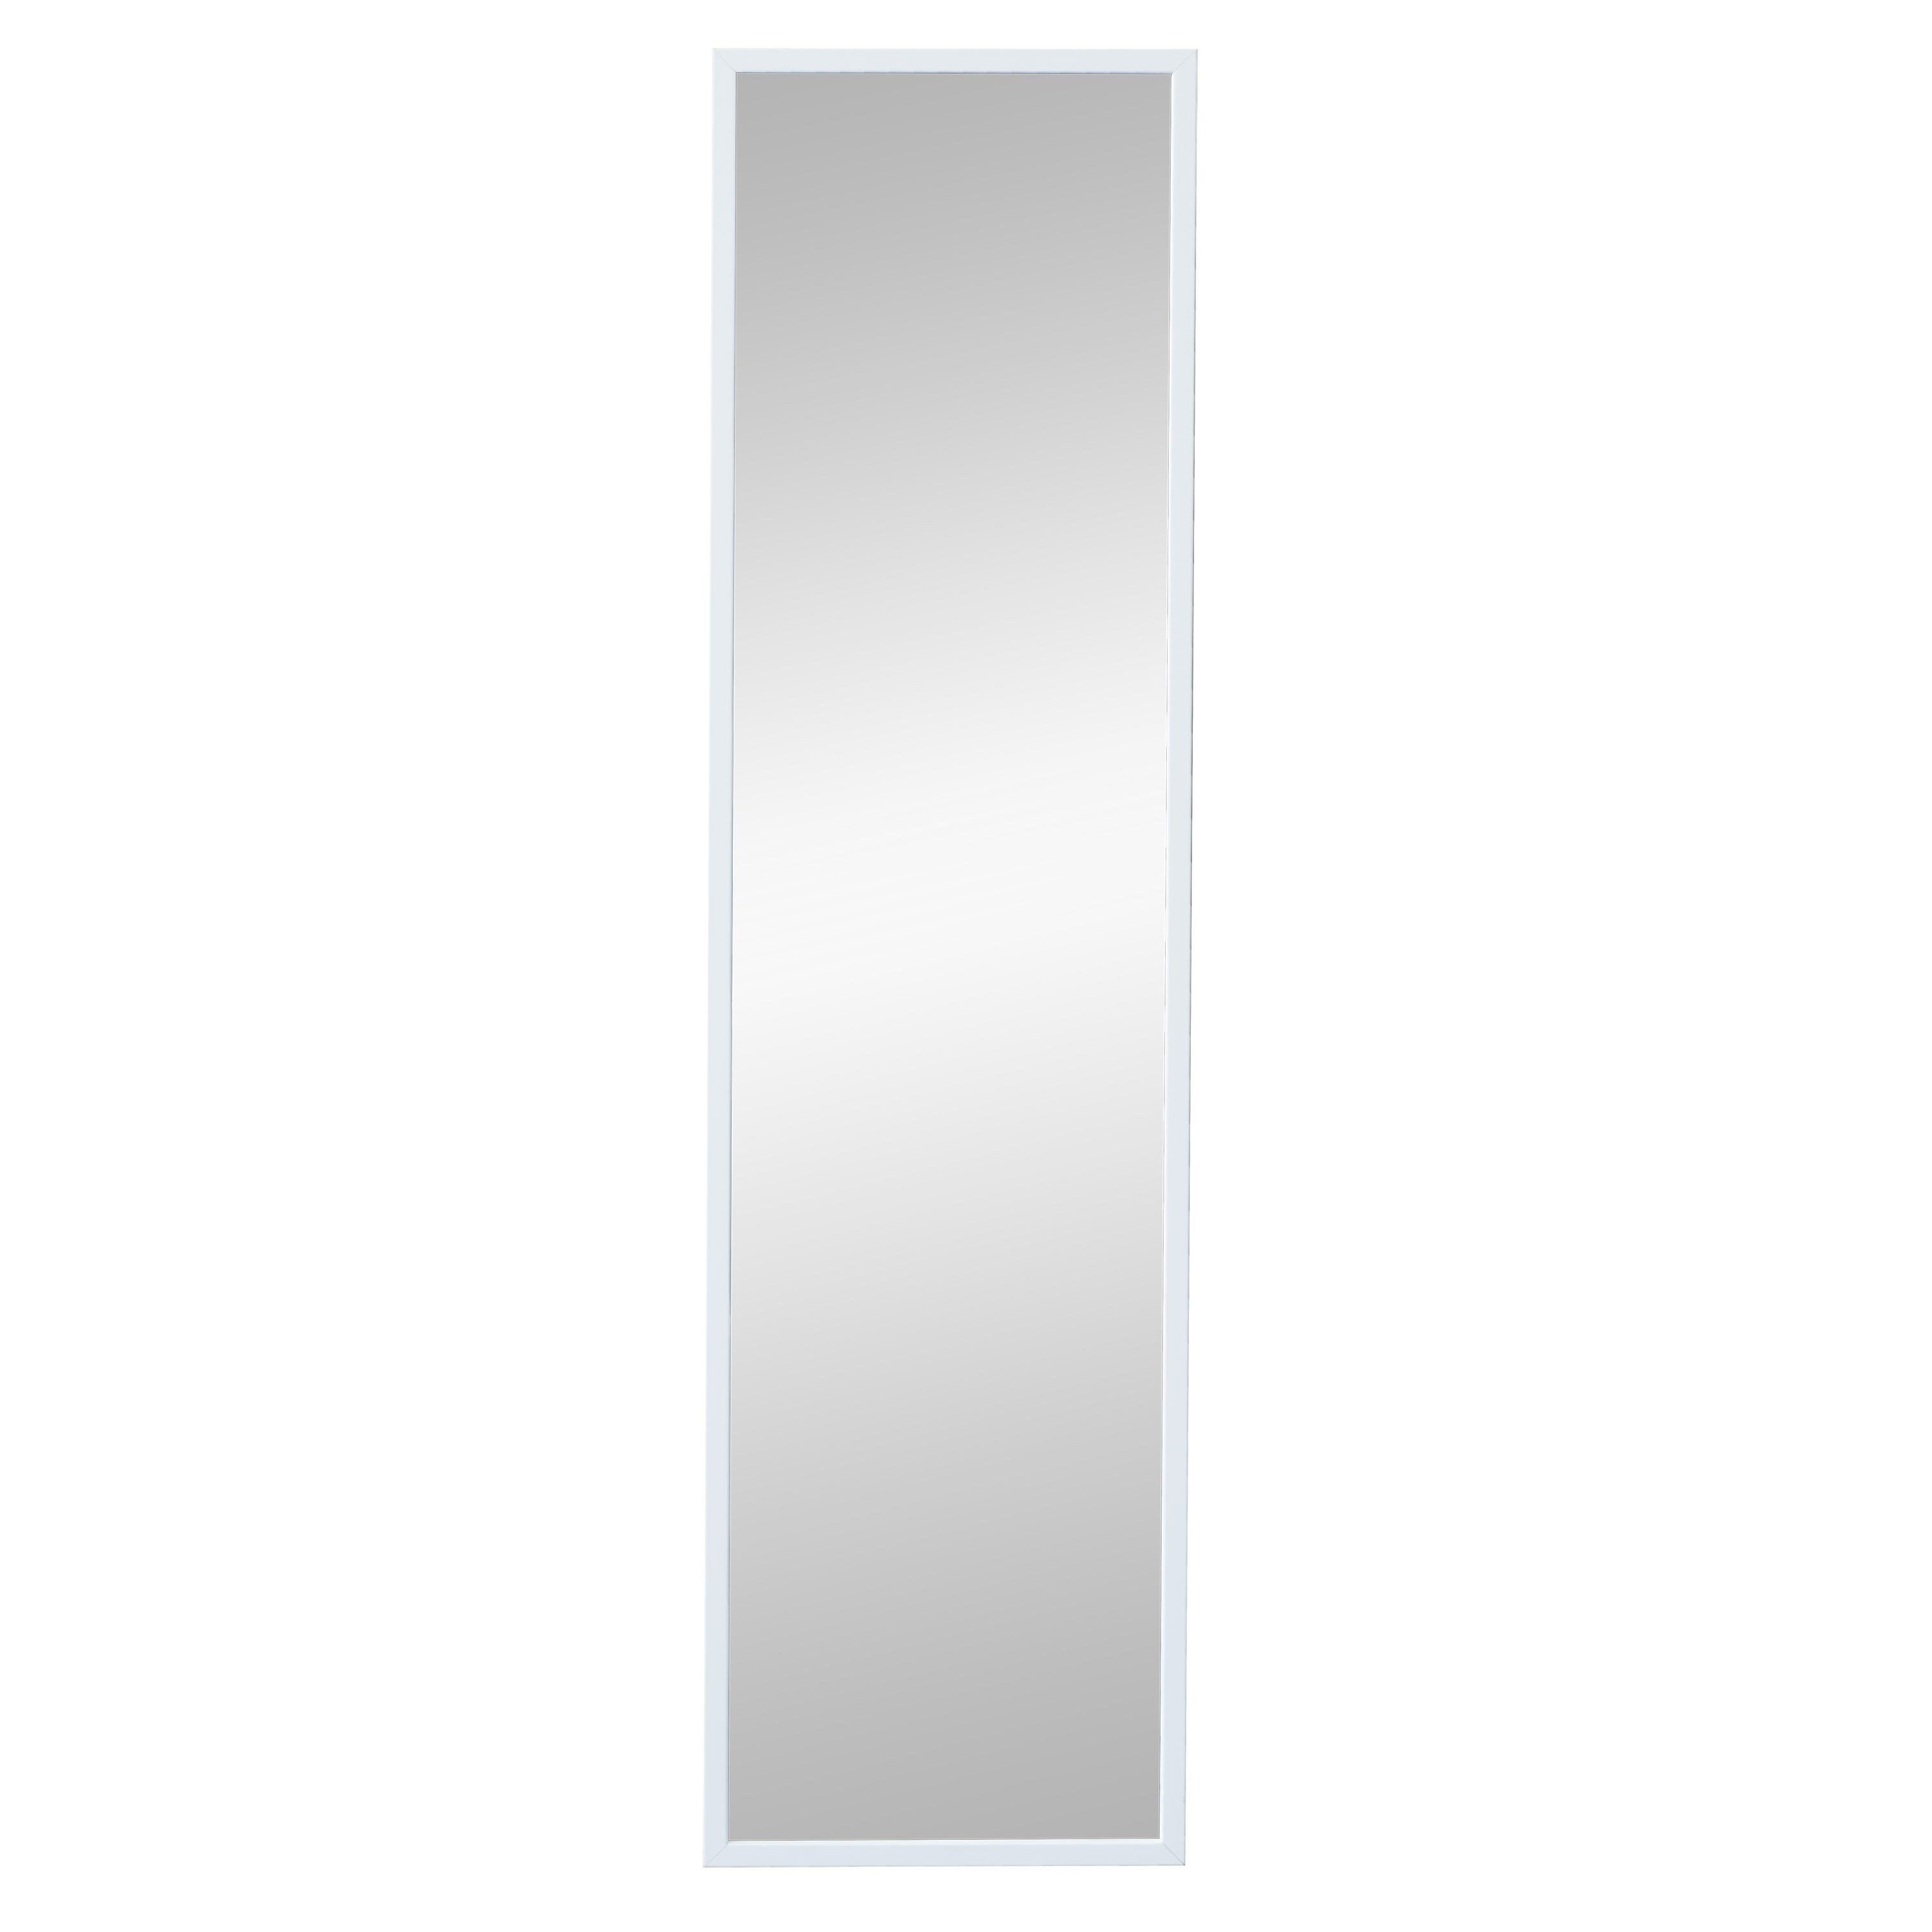 Espejo enmarcado rectangular Puerta negro INSPIRE 120 x 30 cm